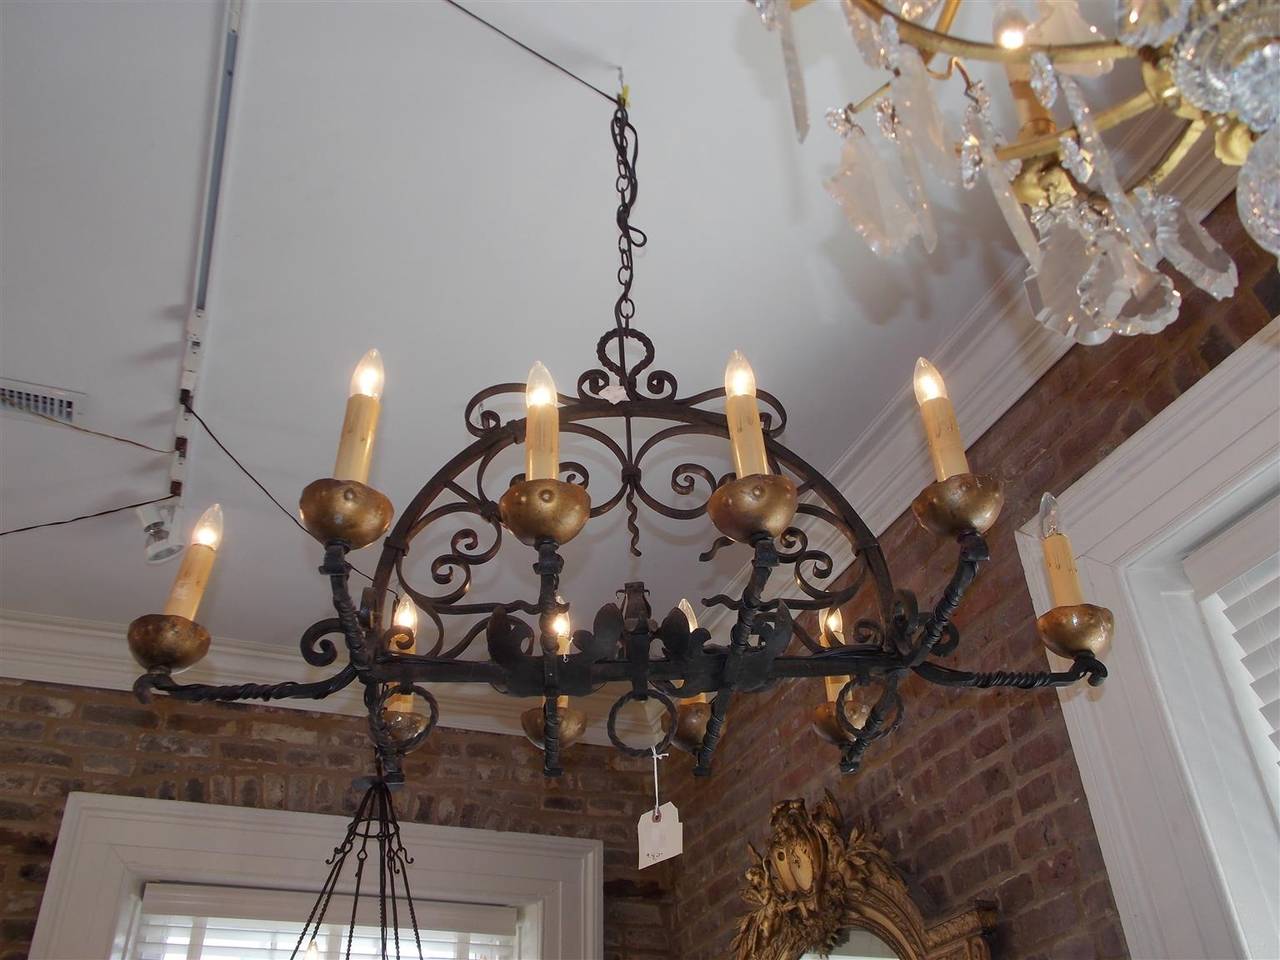 elongated chandeliers